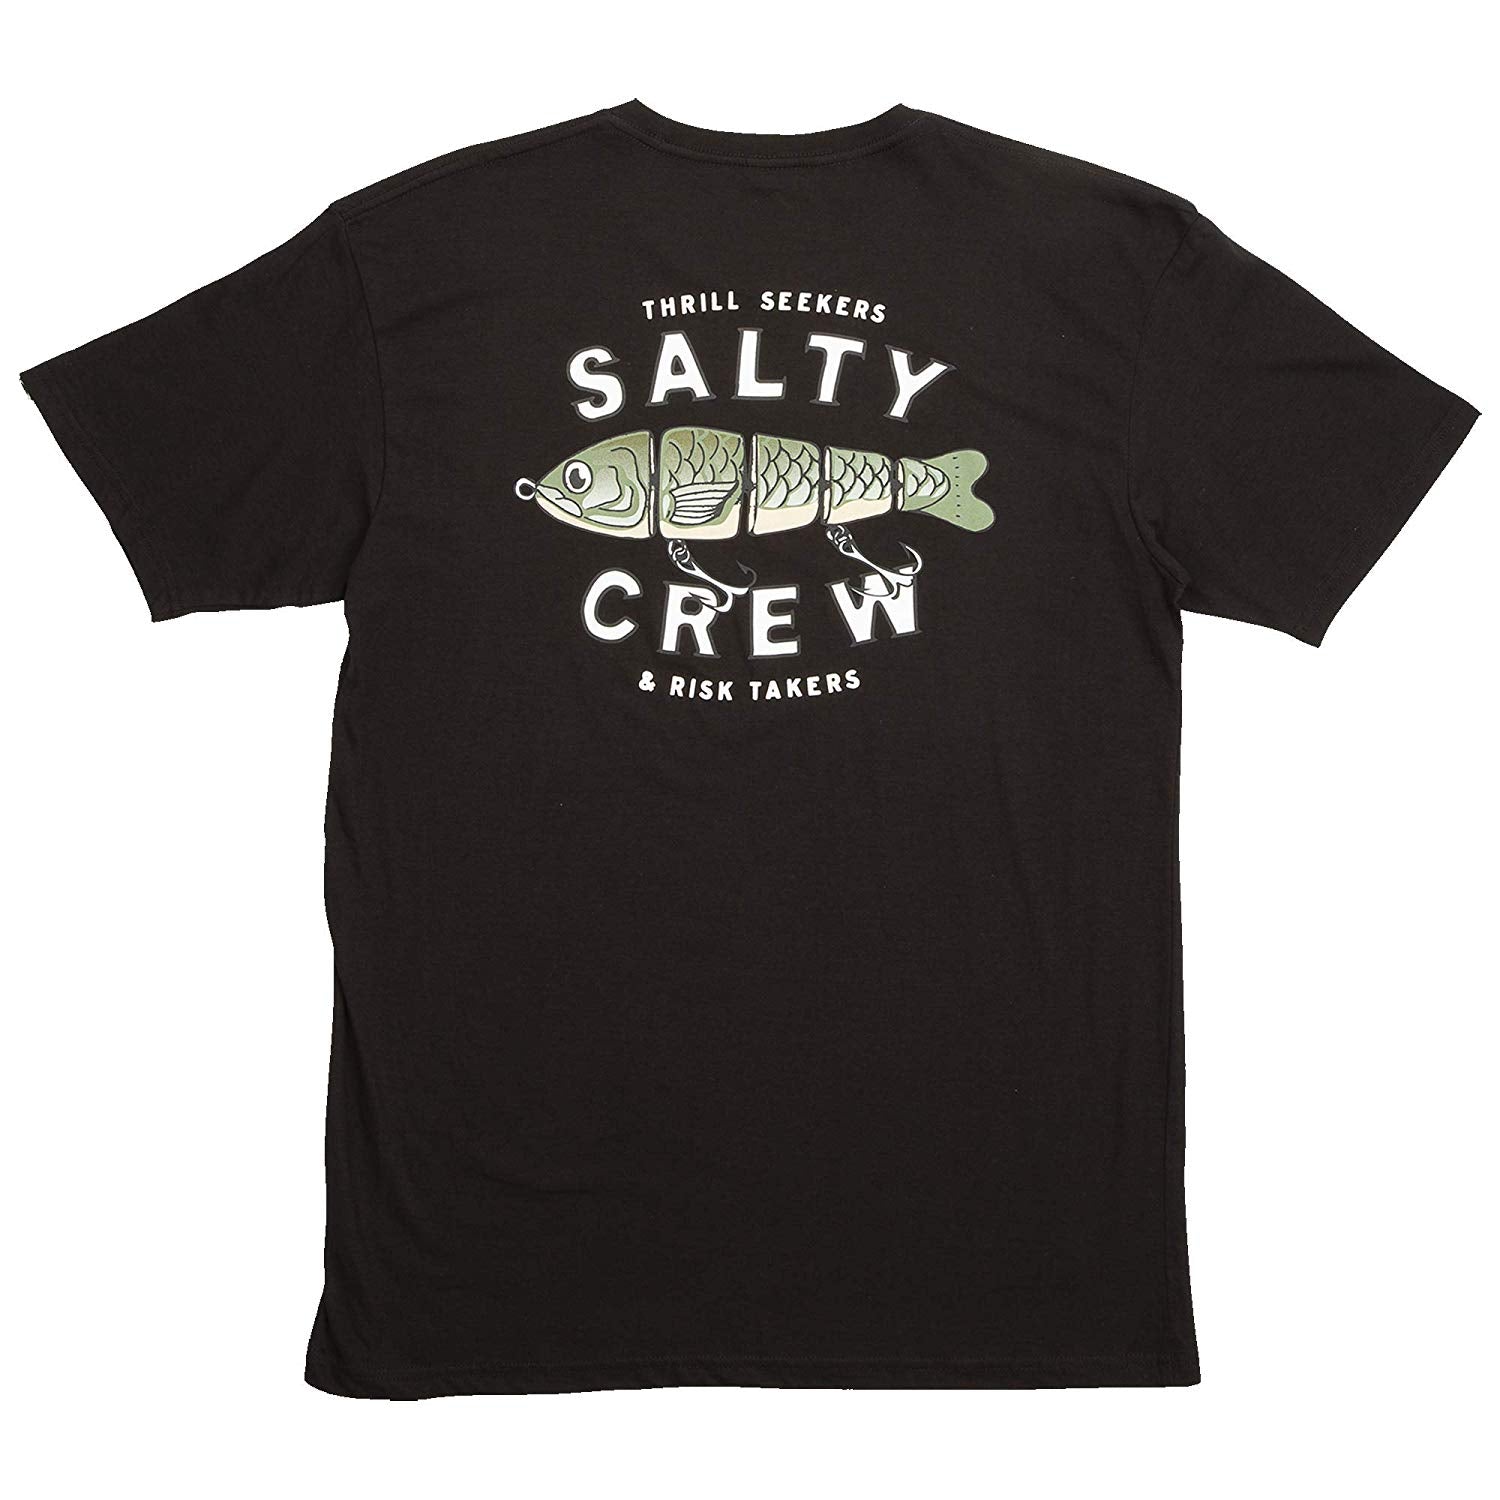 Salty Crew Paddle Tail Boys SS Tee Black XL